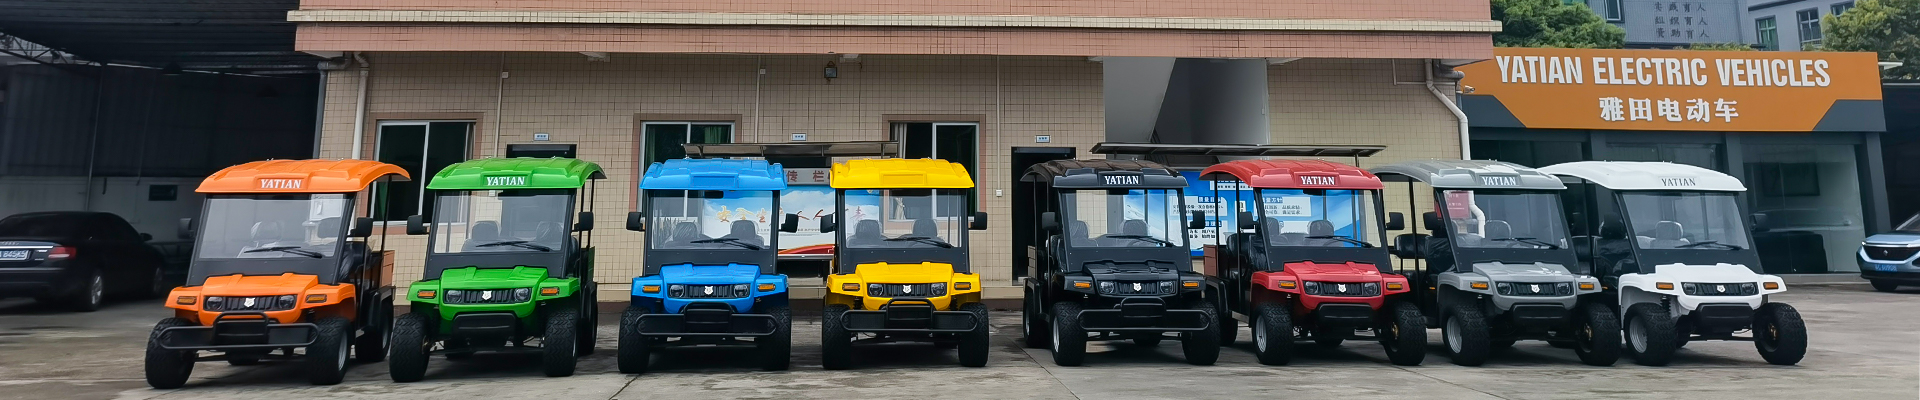 golf carts with ce supplier, street legal golf carts manufacturer